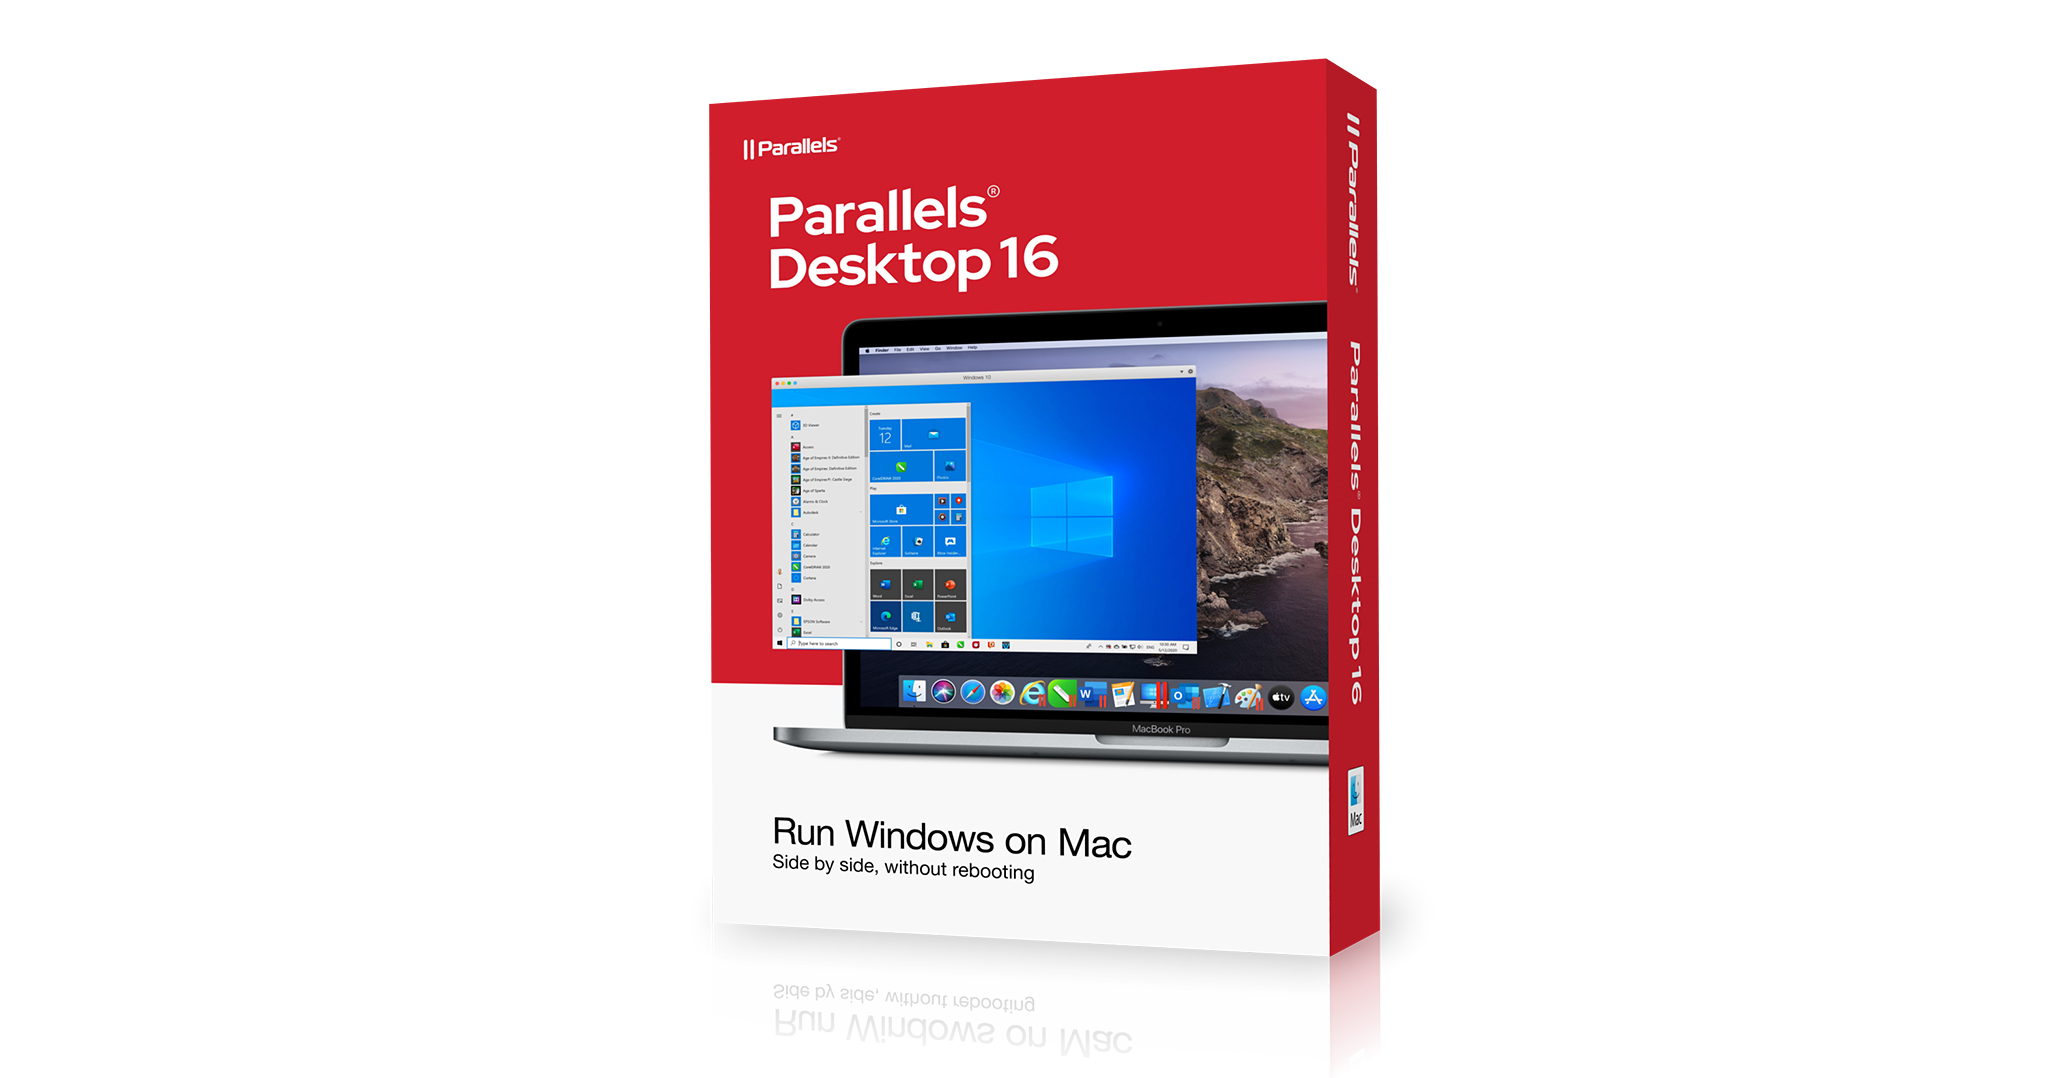 New Arrival: Parallels Desktop 16 for Mac « Tech bytes for tea?